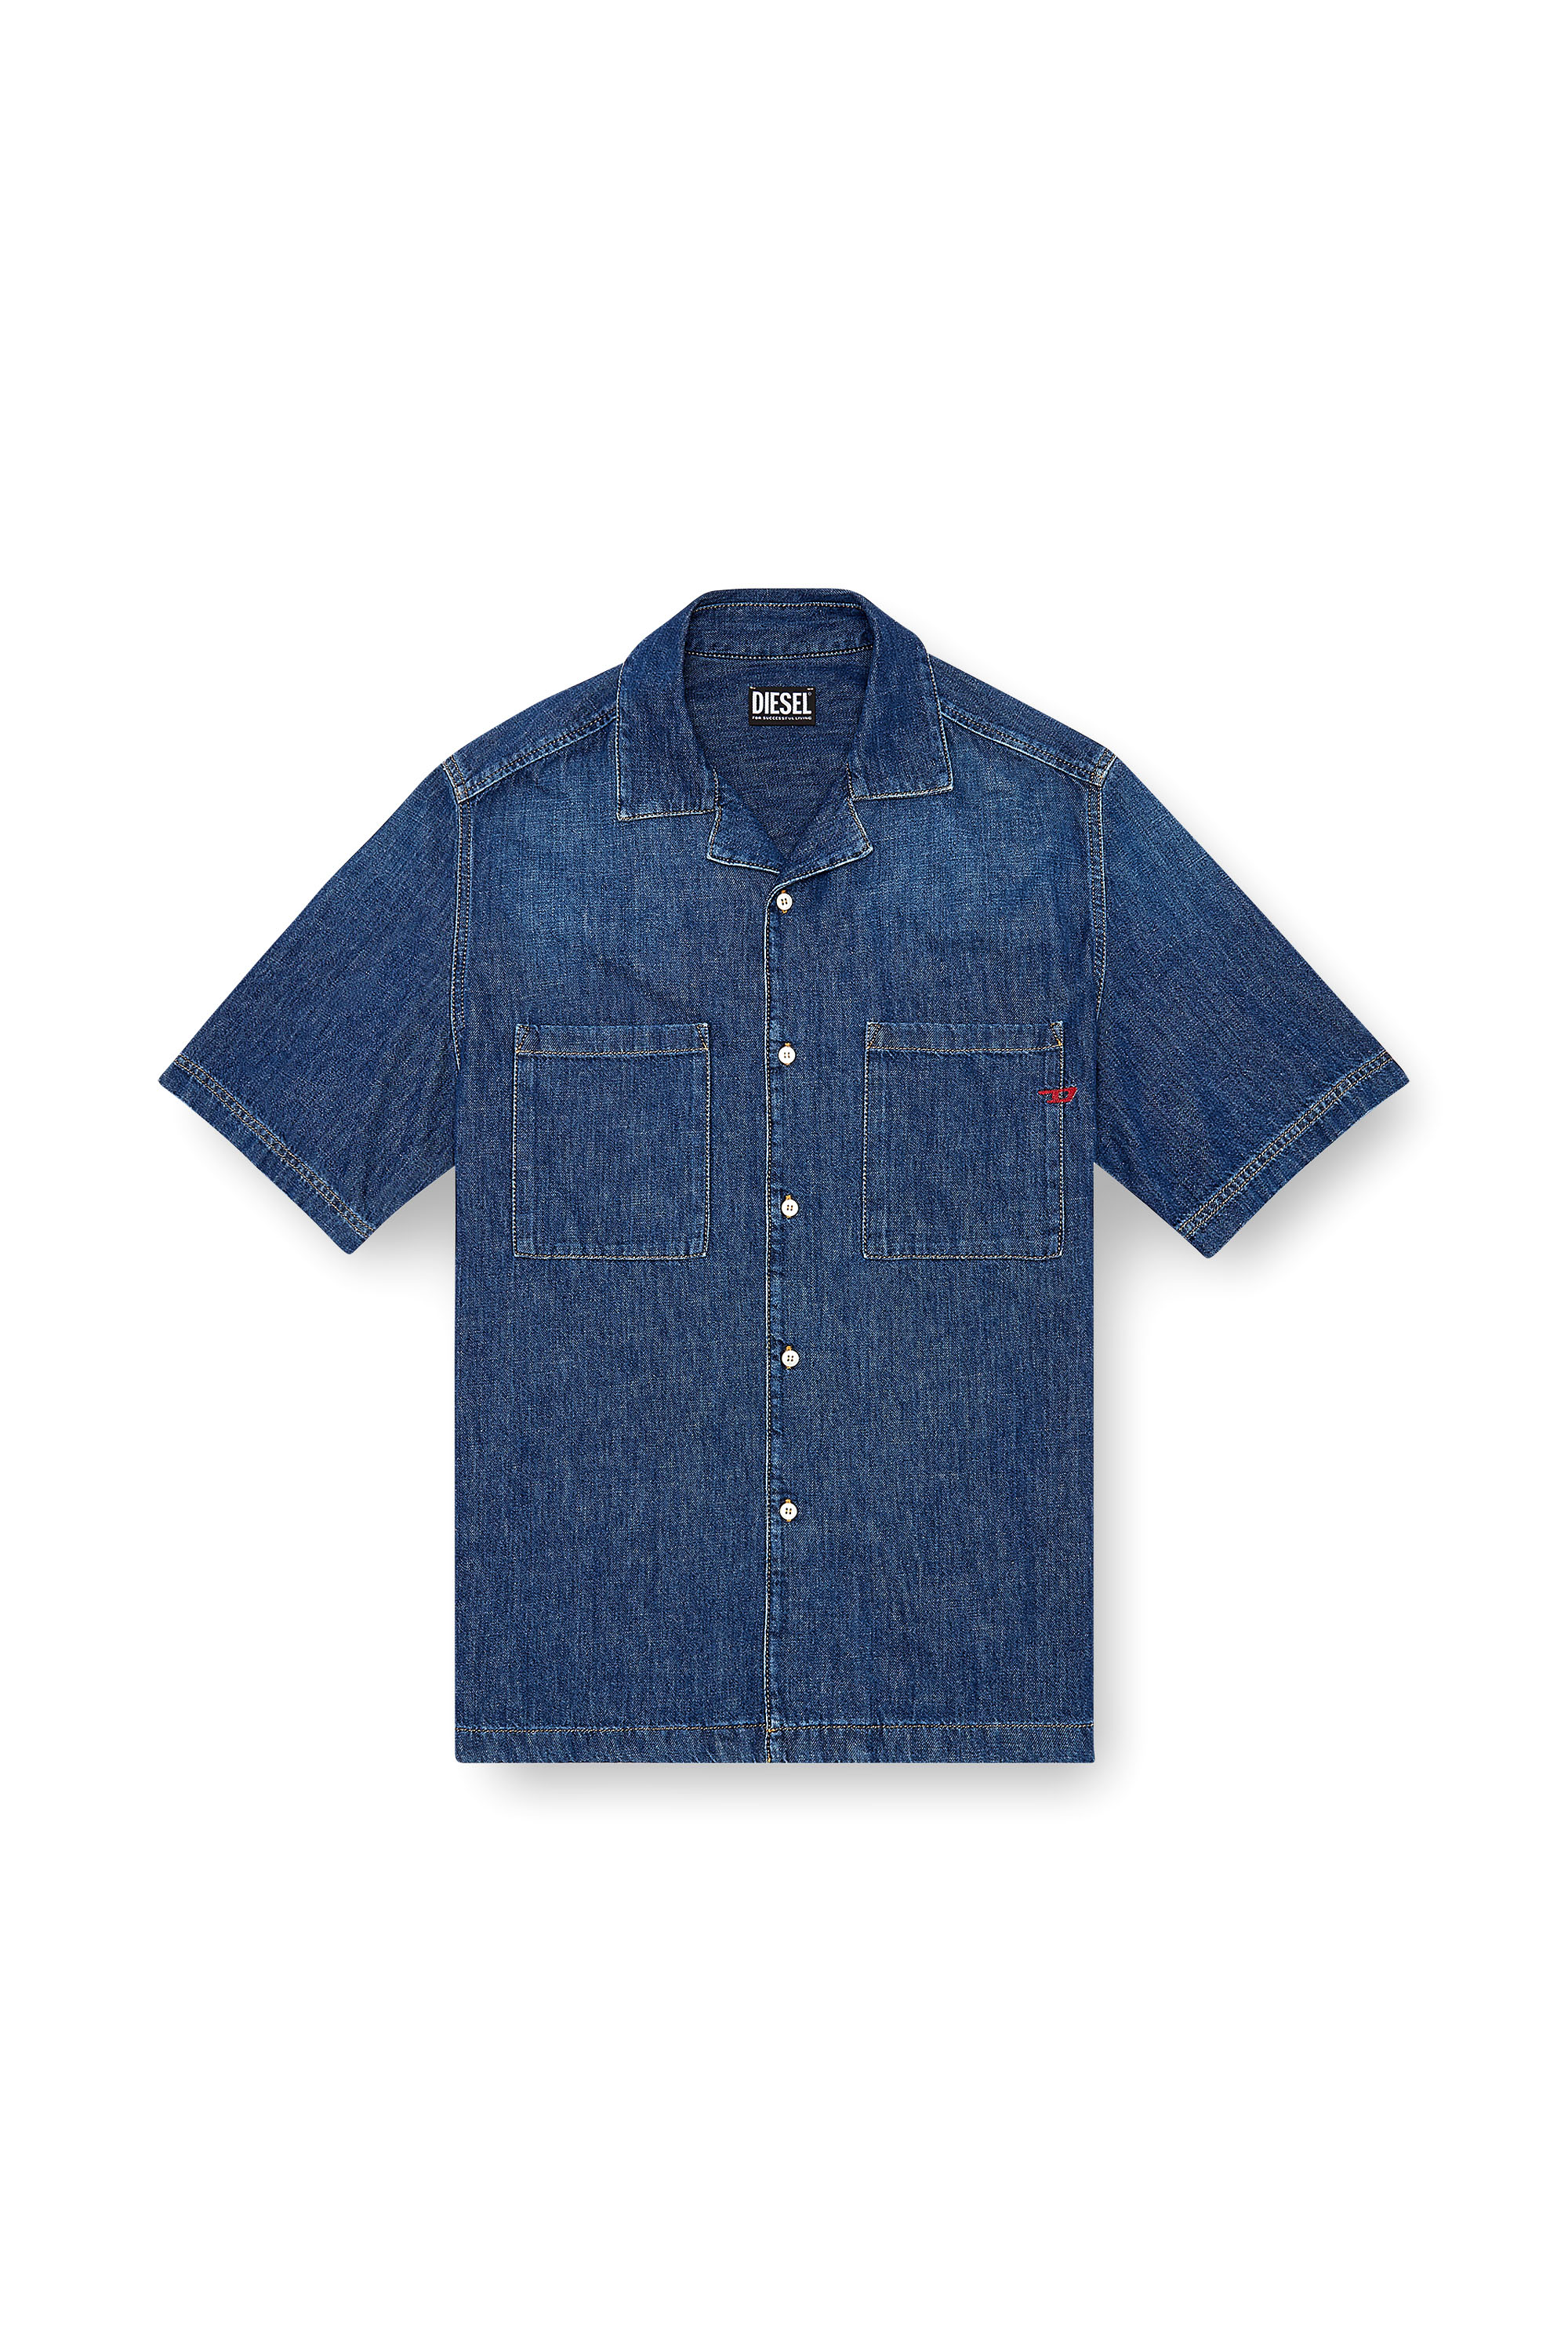 Diesel - D-PAROSHORT, Male Bowling shirt in denim in Blue - Image 5